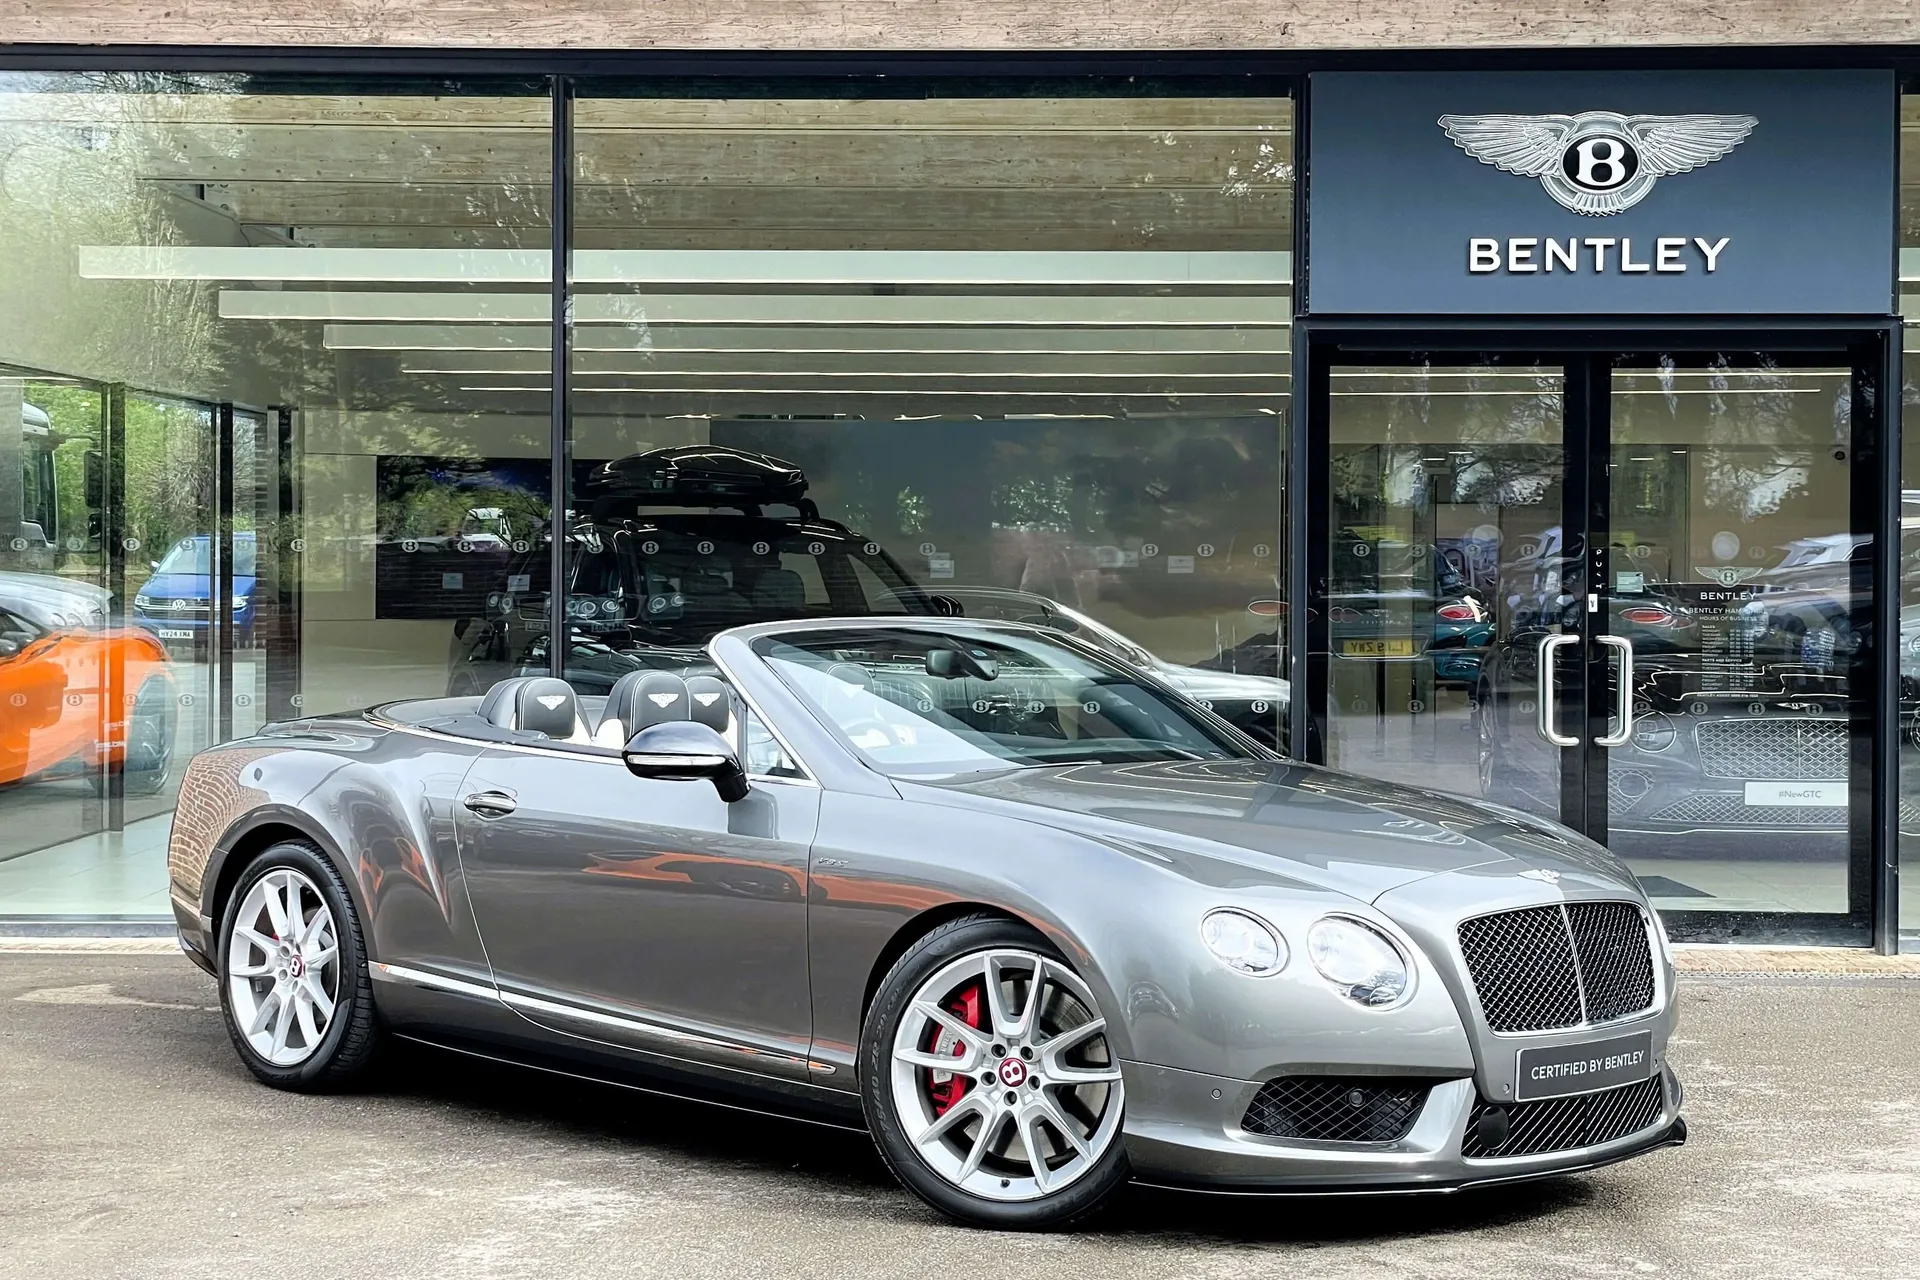 Bentley Continental focused image